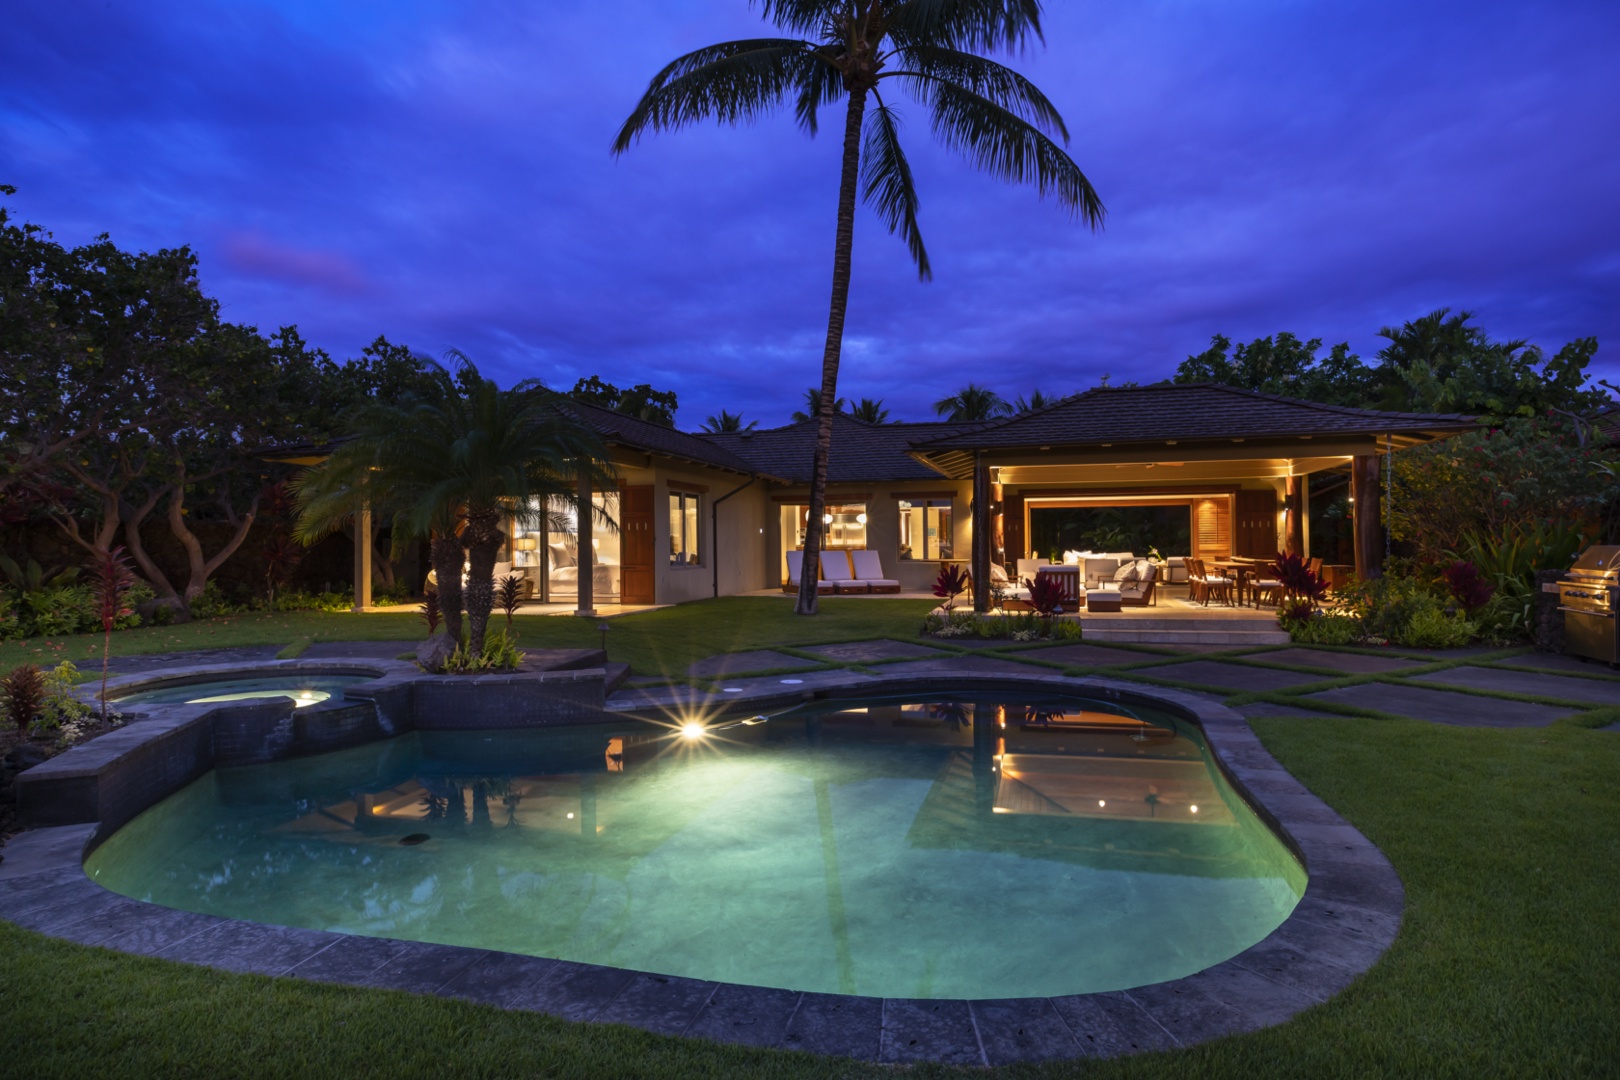 Kailua Kona Vacation Rentals, 4BD Kahikole Street (218) Estate Home at Four Seasons Resort at Hualalai - View of the private pool & spa at twilight, with the main lanai & primary bedroom lanai beyond